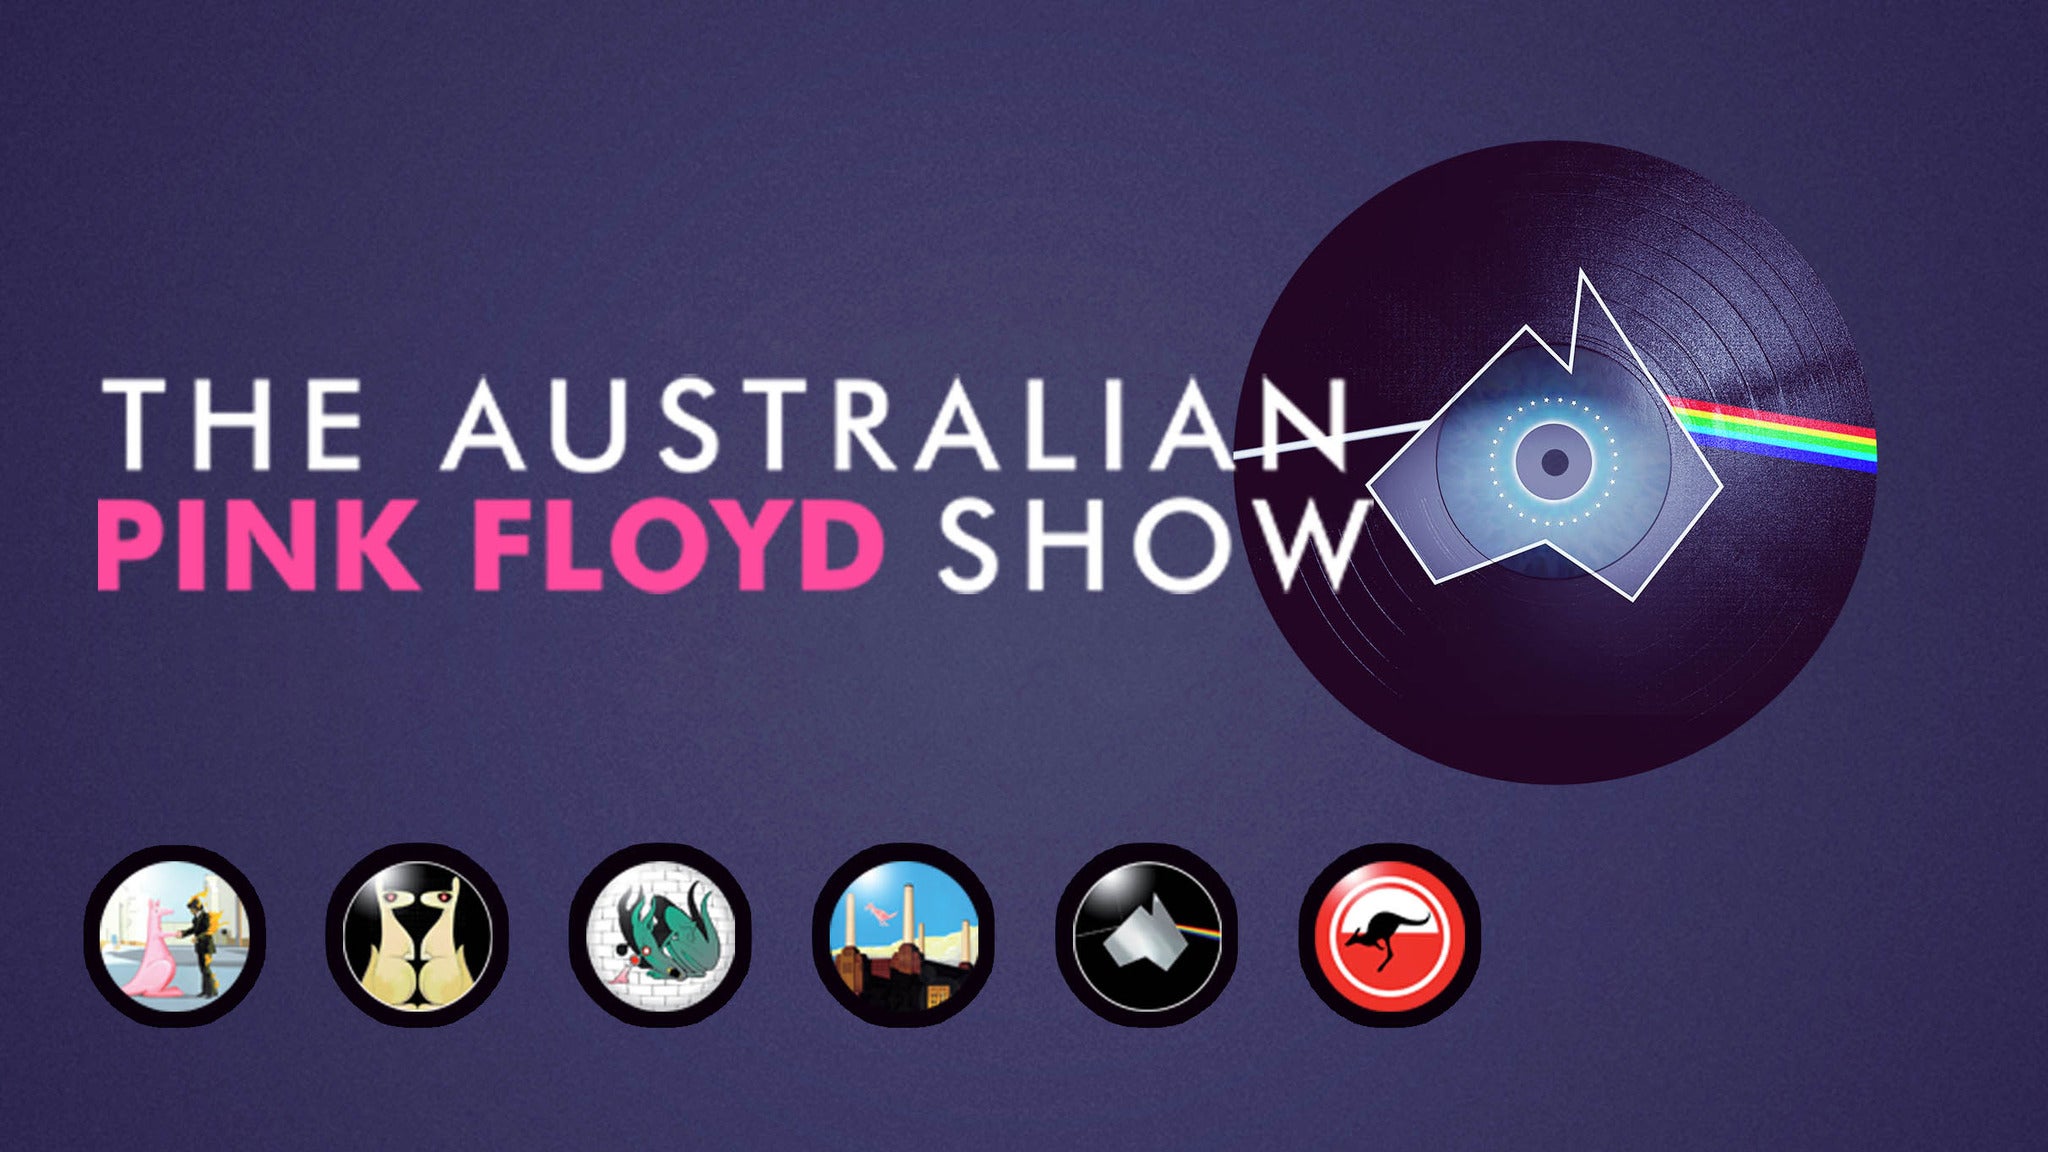 The Australian Pink Floyd Show at Vina Robles Amphitheatre